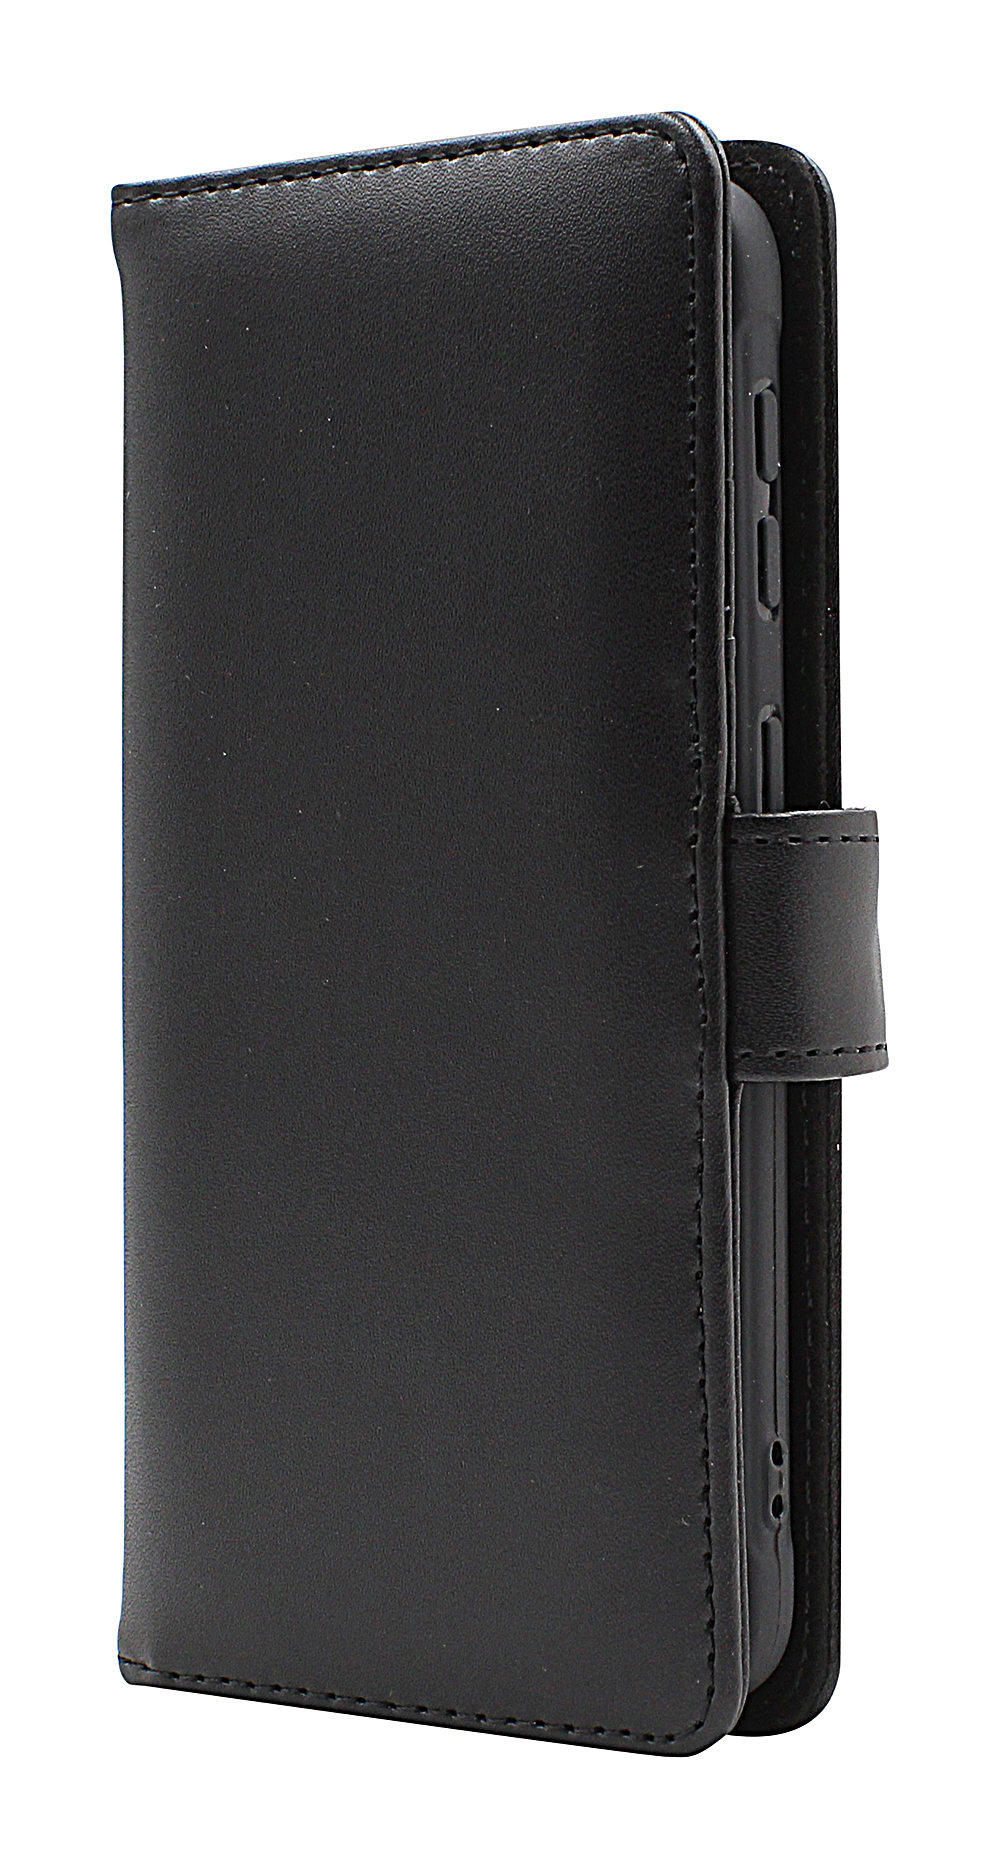 CoverInSkimblocker Plnboksfodral Samsung Galaxy Xcover 5 (SM-G525F)